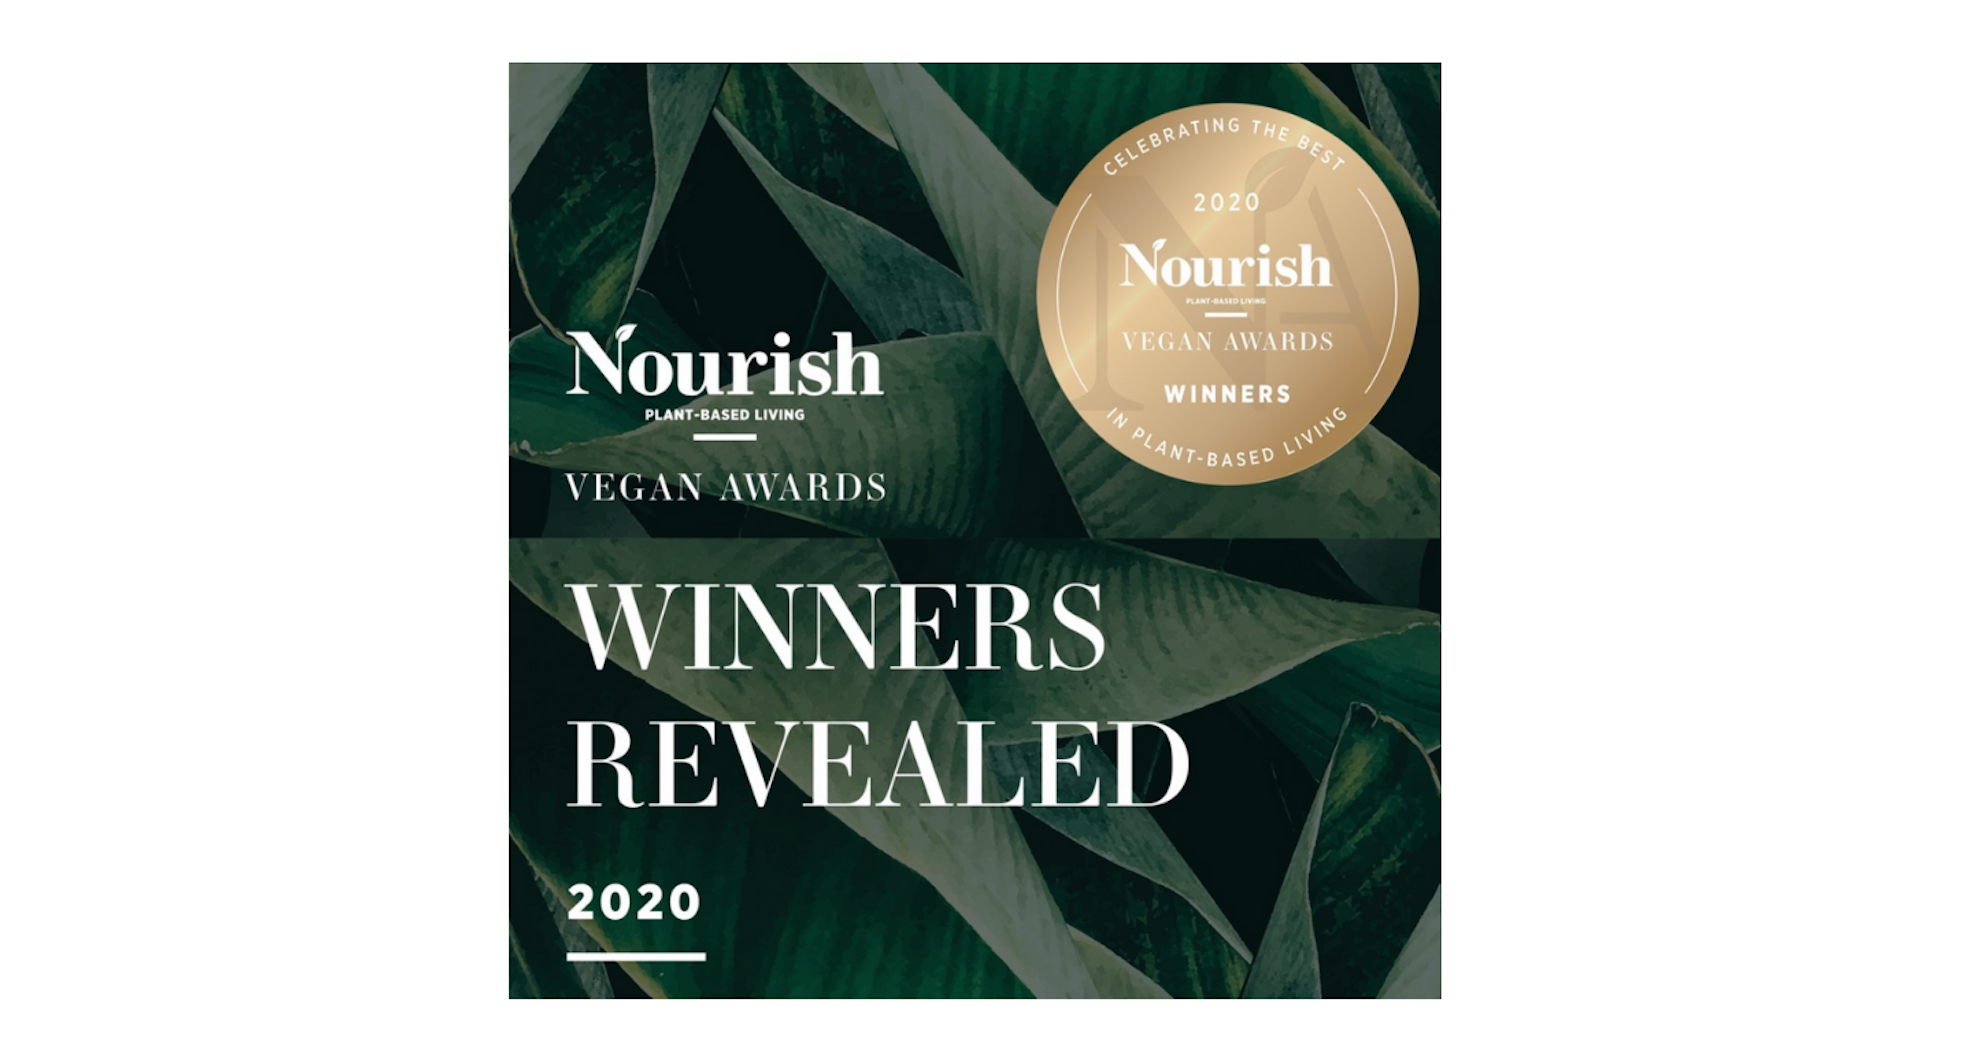 Amazonia, Bodhi Restaurant, Cobs & Pana amongst winners announced for Nourish Vegan Awards 2020 Image